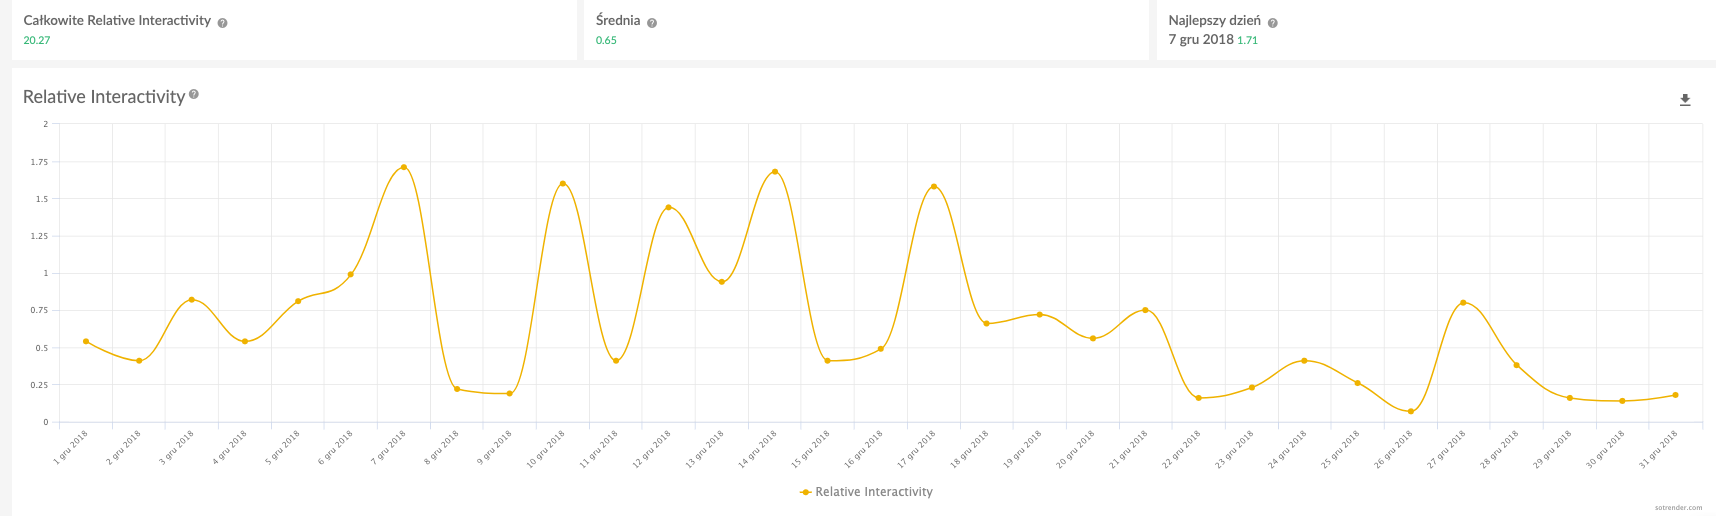 Relative Interactivity Index dla Wizzaira